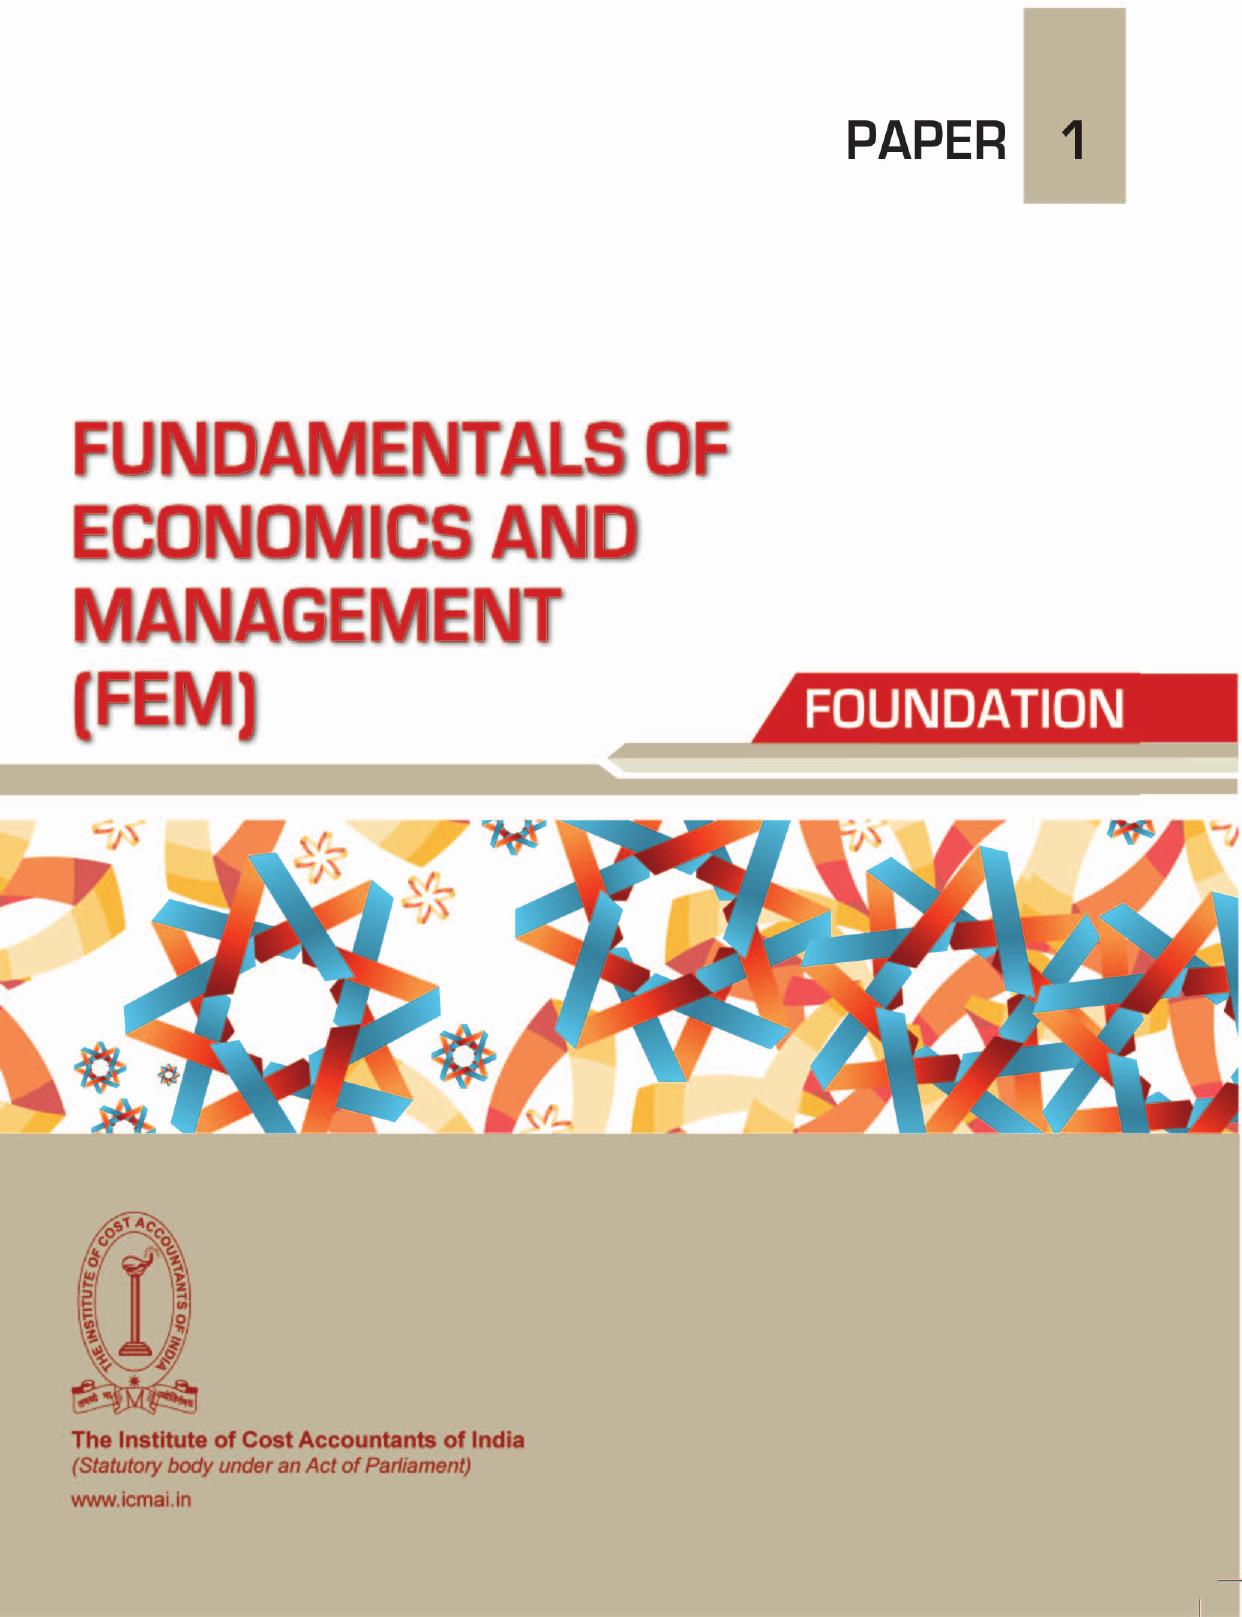 Fundamentals of Economic and Management Foundation